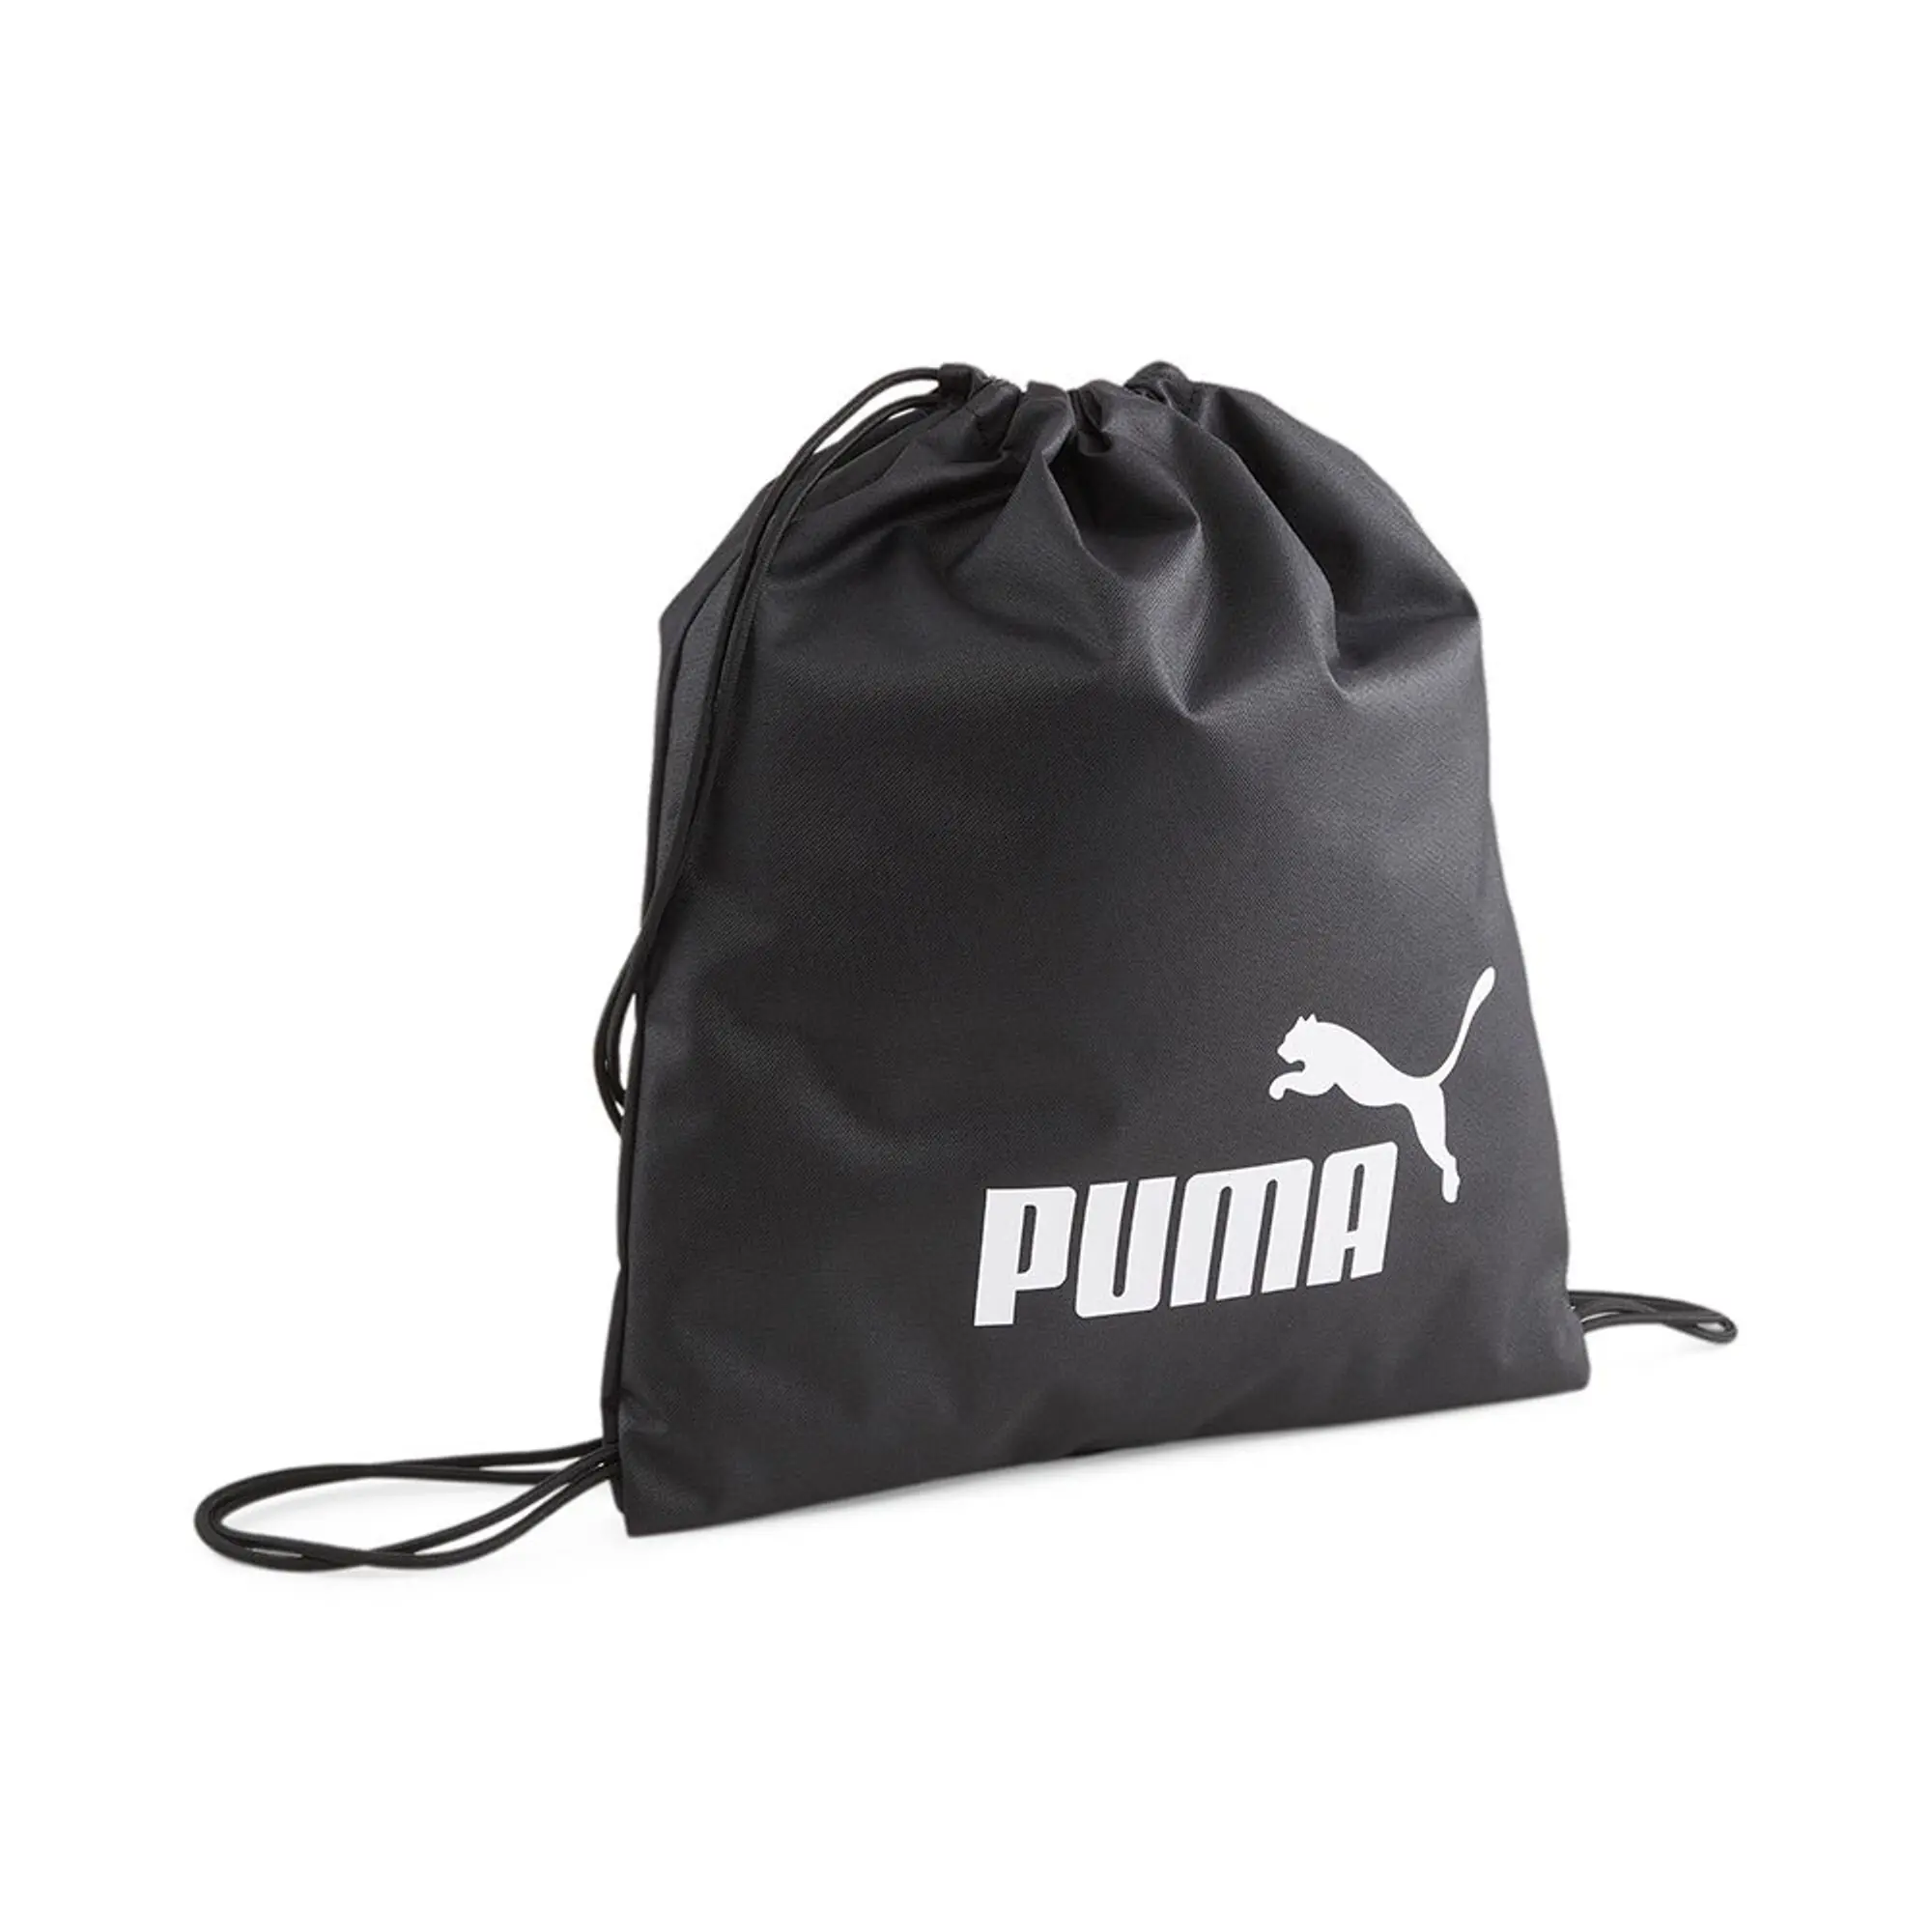 Puma Phase Gym Sack - Black